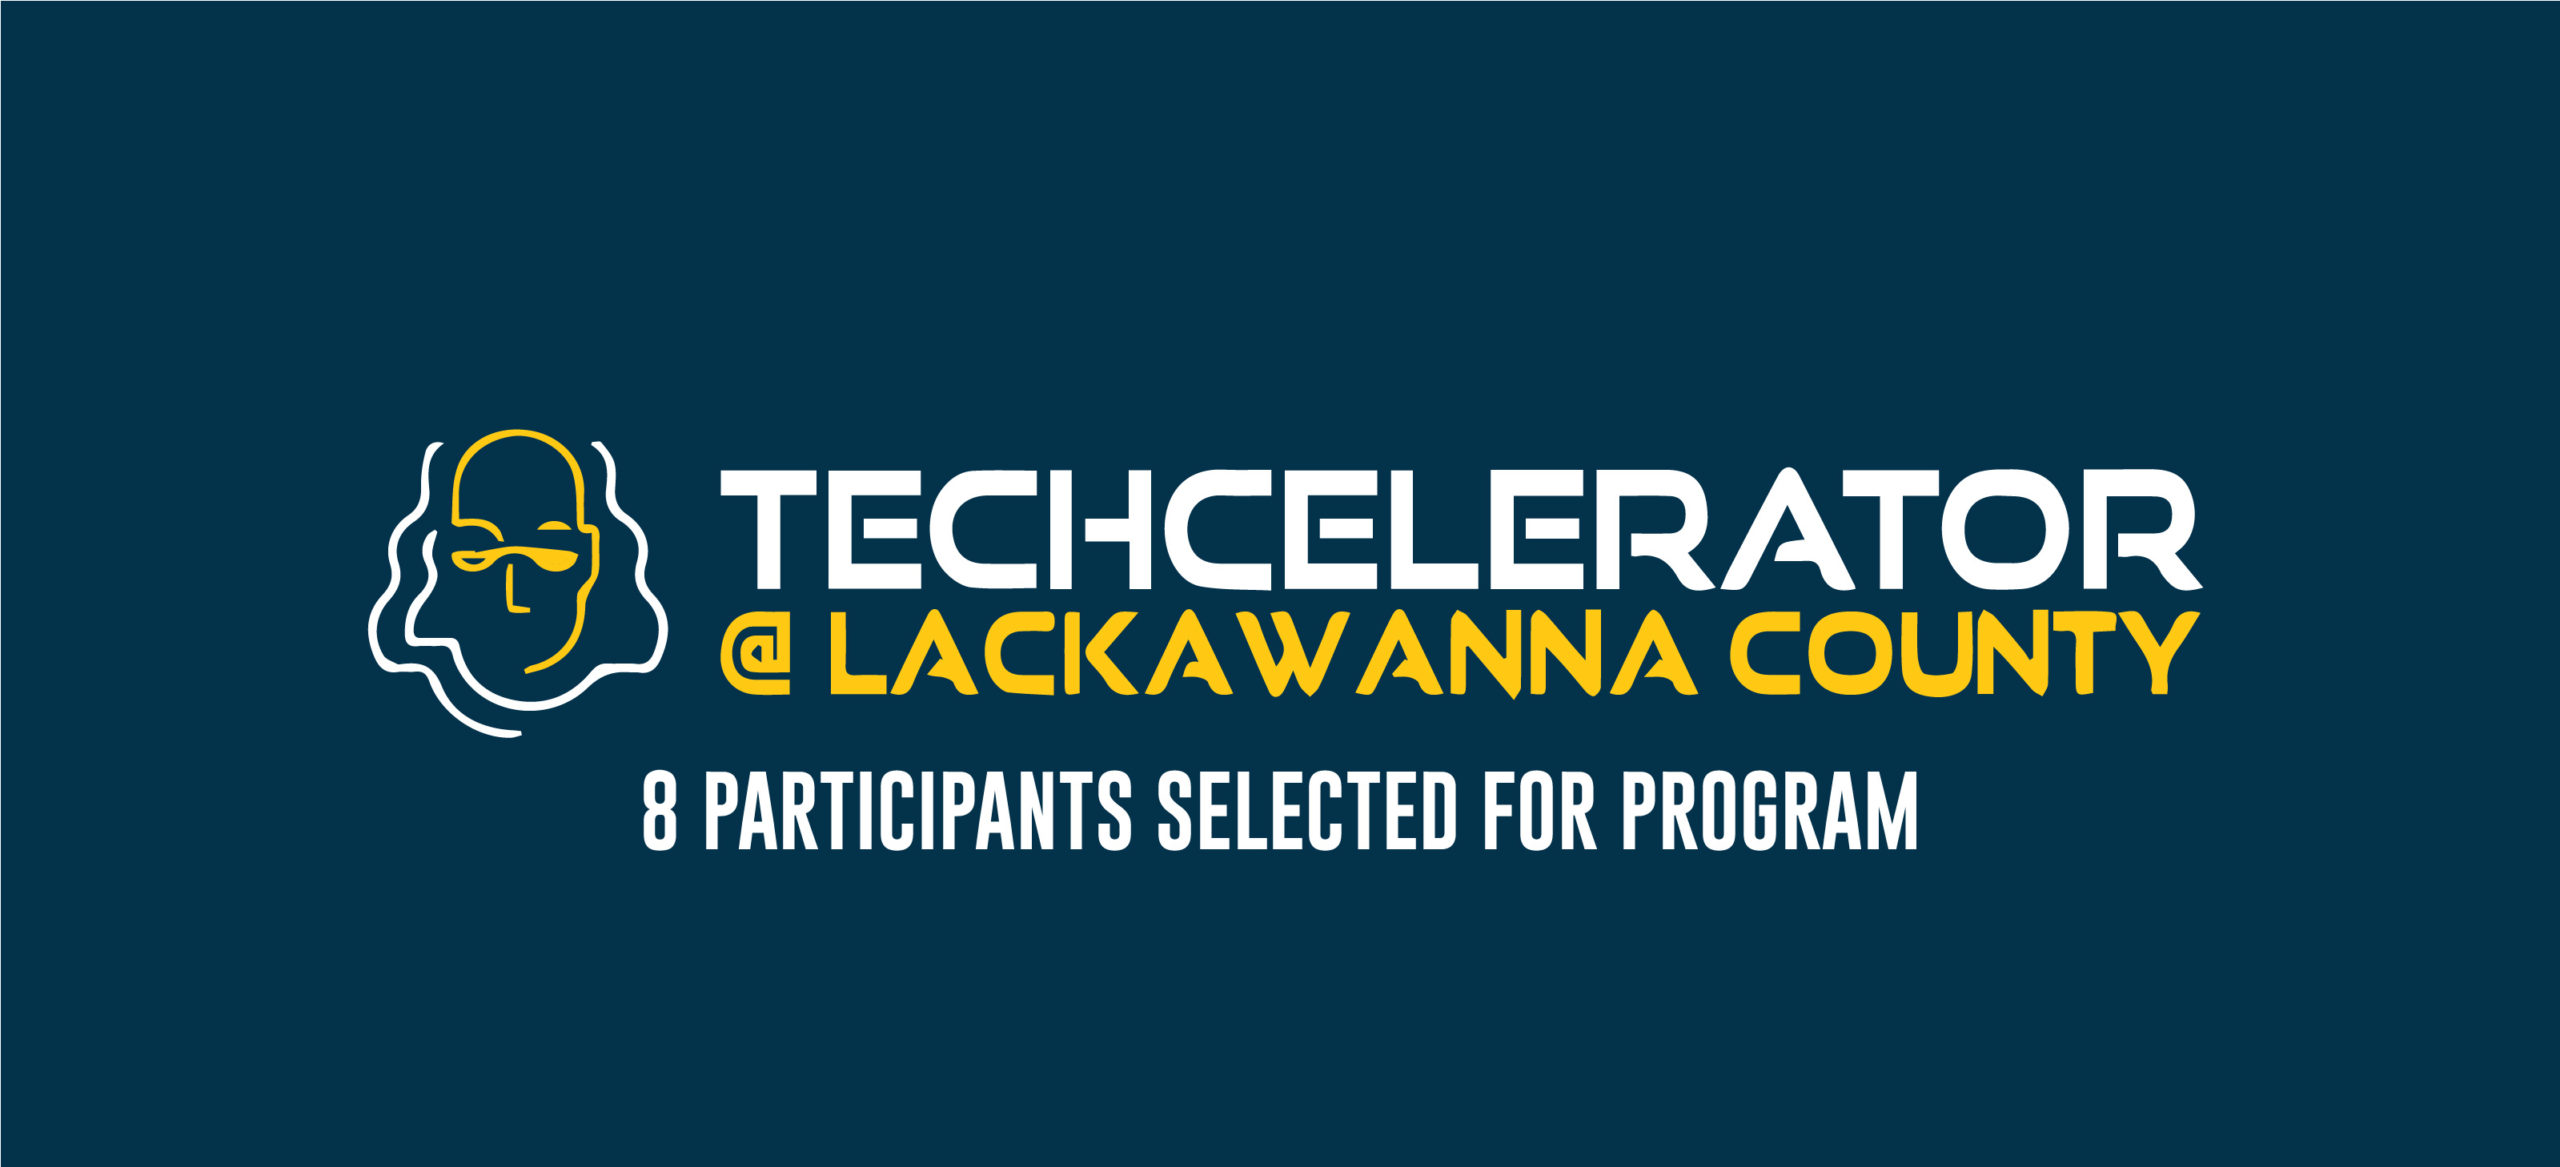 8 Participants were Selected for TechCelerator Program